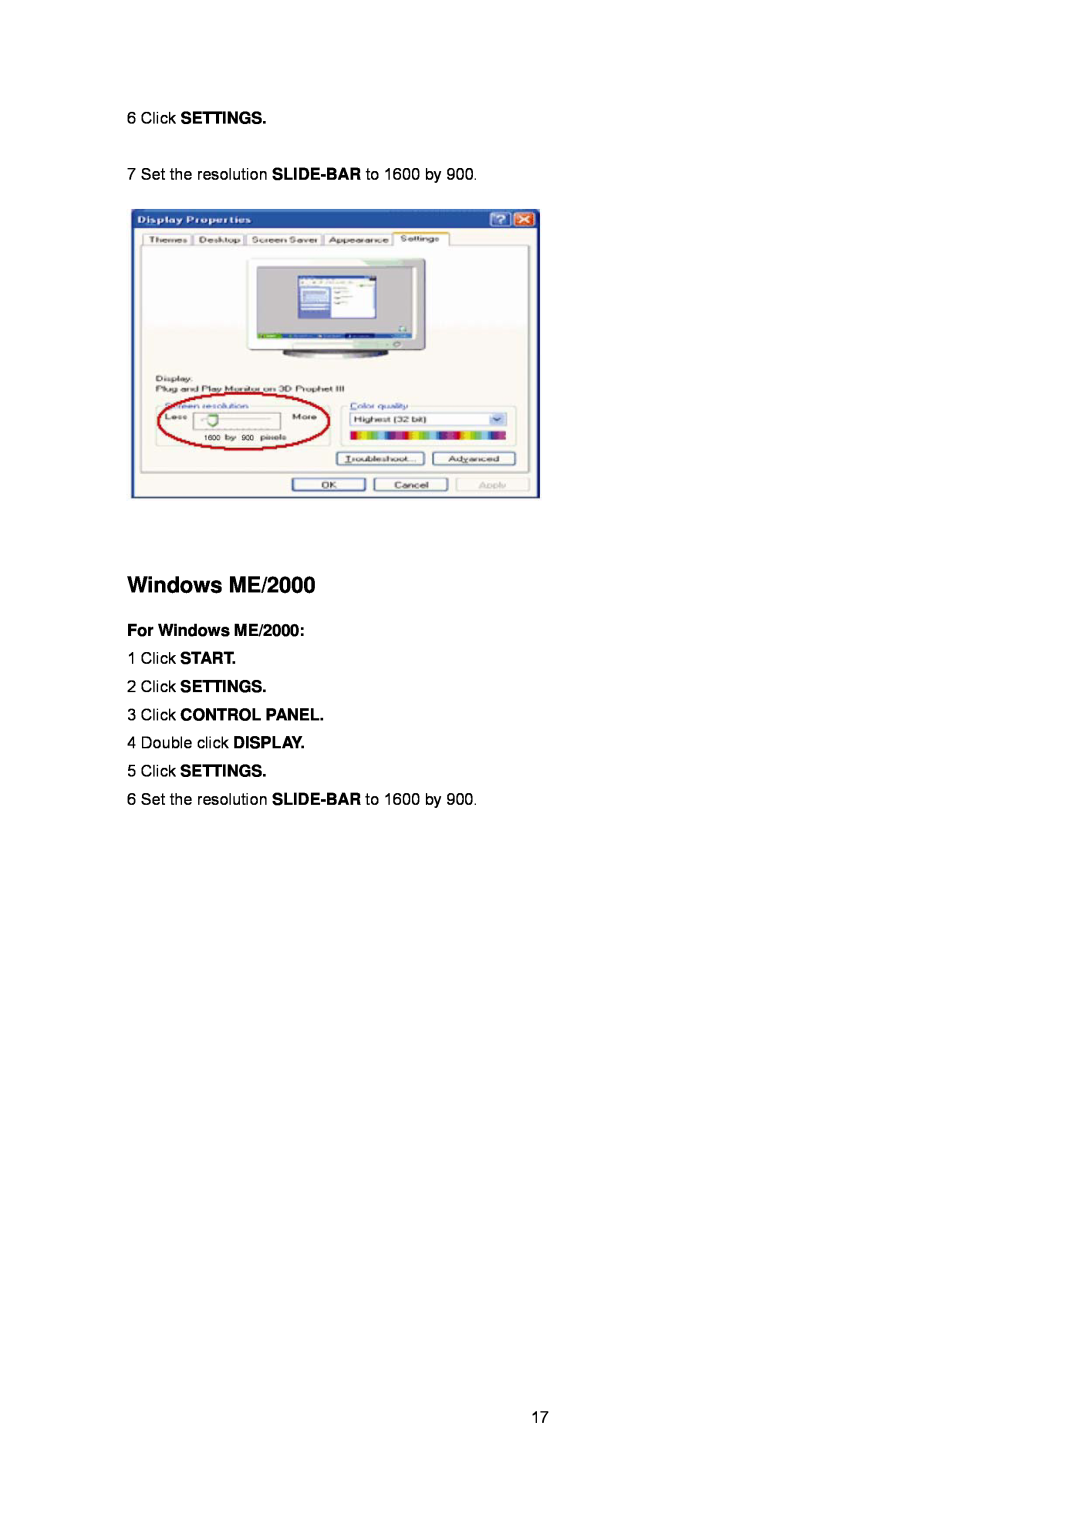 AOC E2043FK manual For Windows ME/2000, Click SETTINGS 3 Click CONTROL PANEL 